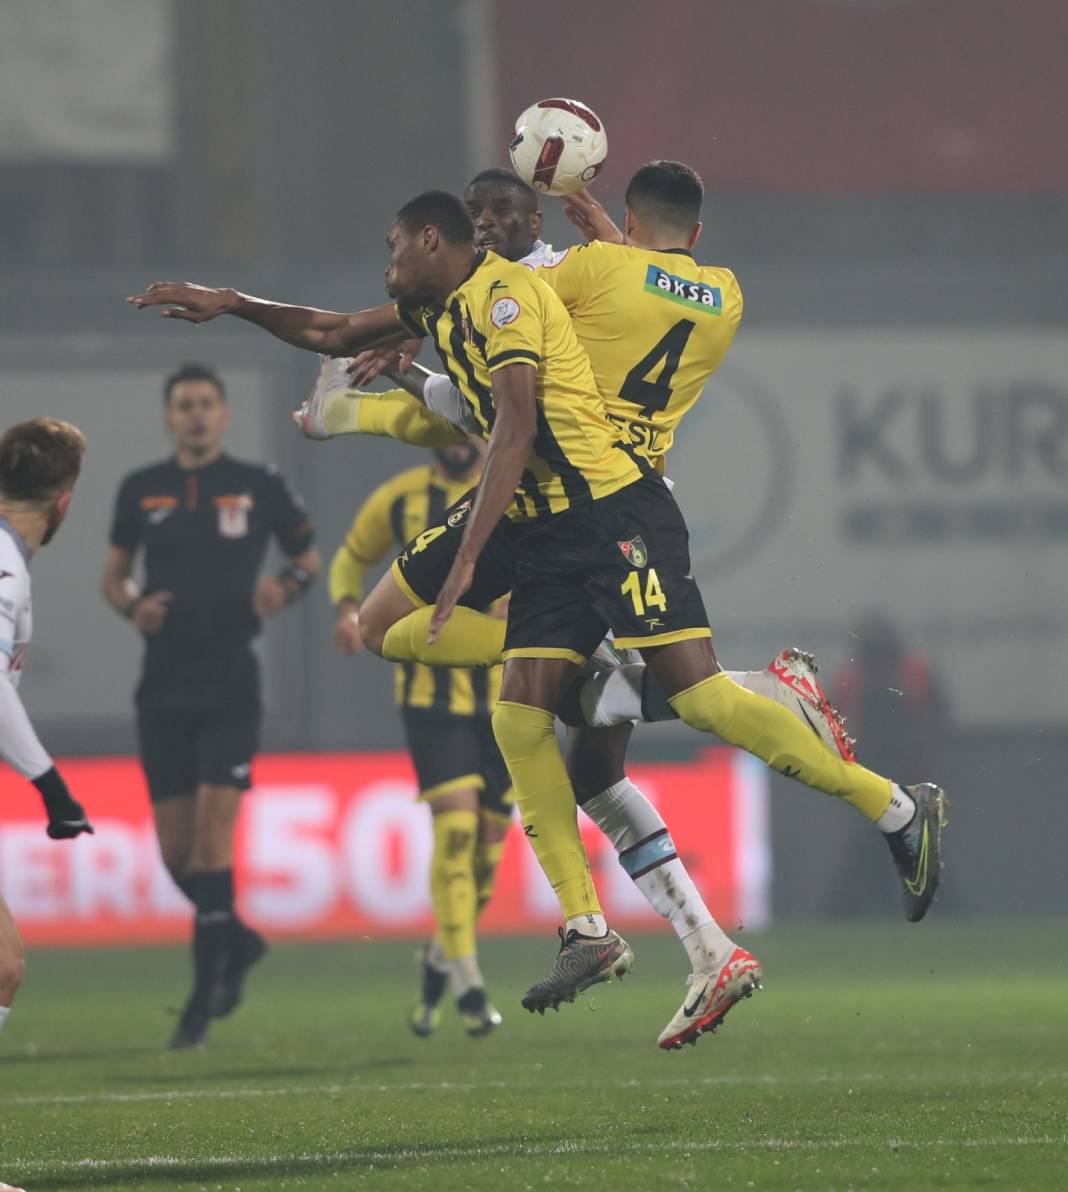 İstanbulspor-Trabzonspor maçı fotoğrafları 19